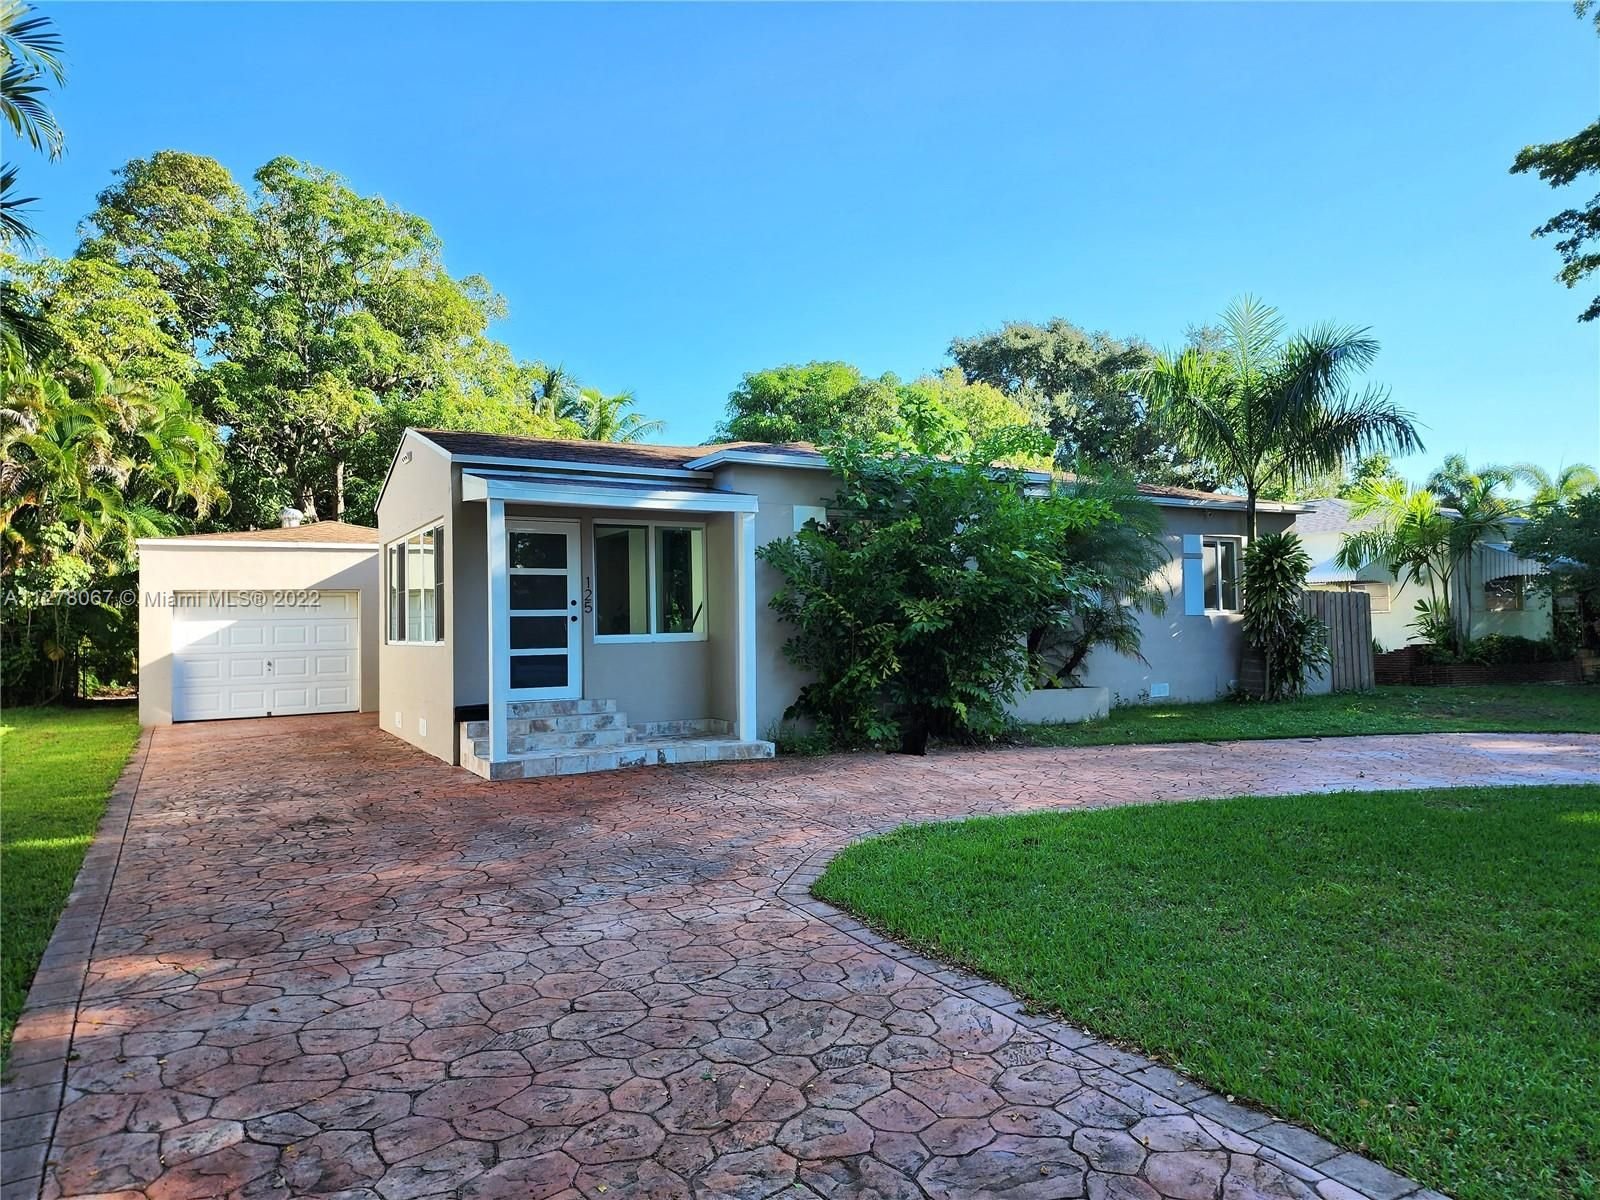 Real estate property located at 125 88th St, Miami-Dade County, El Portal, FL